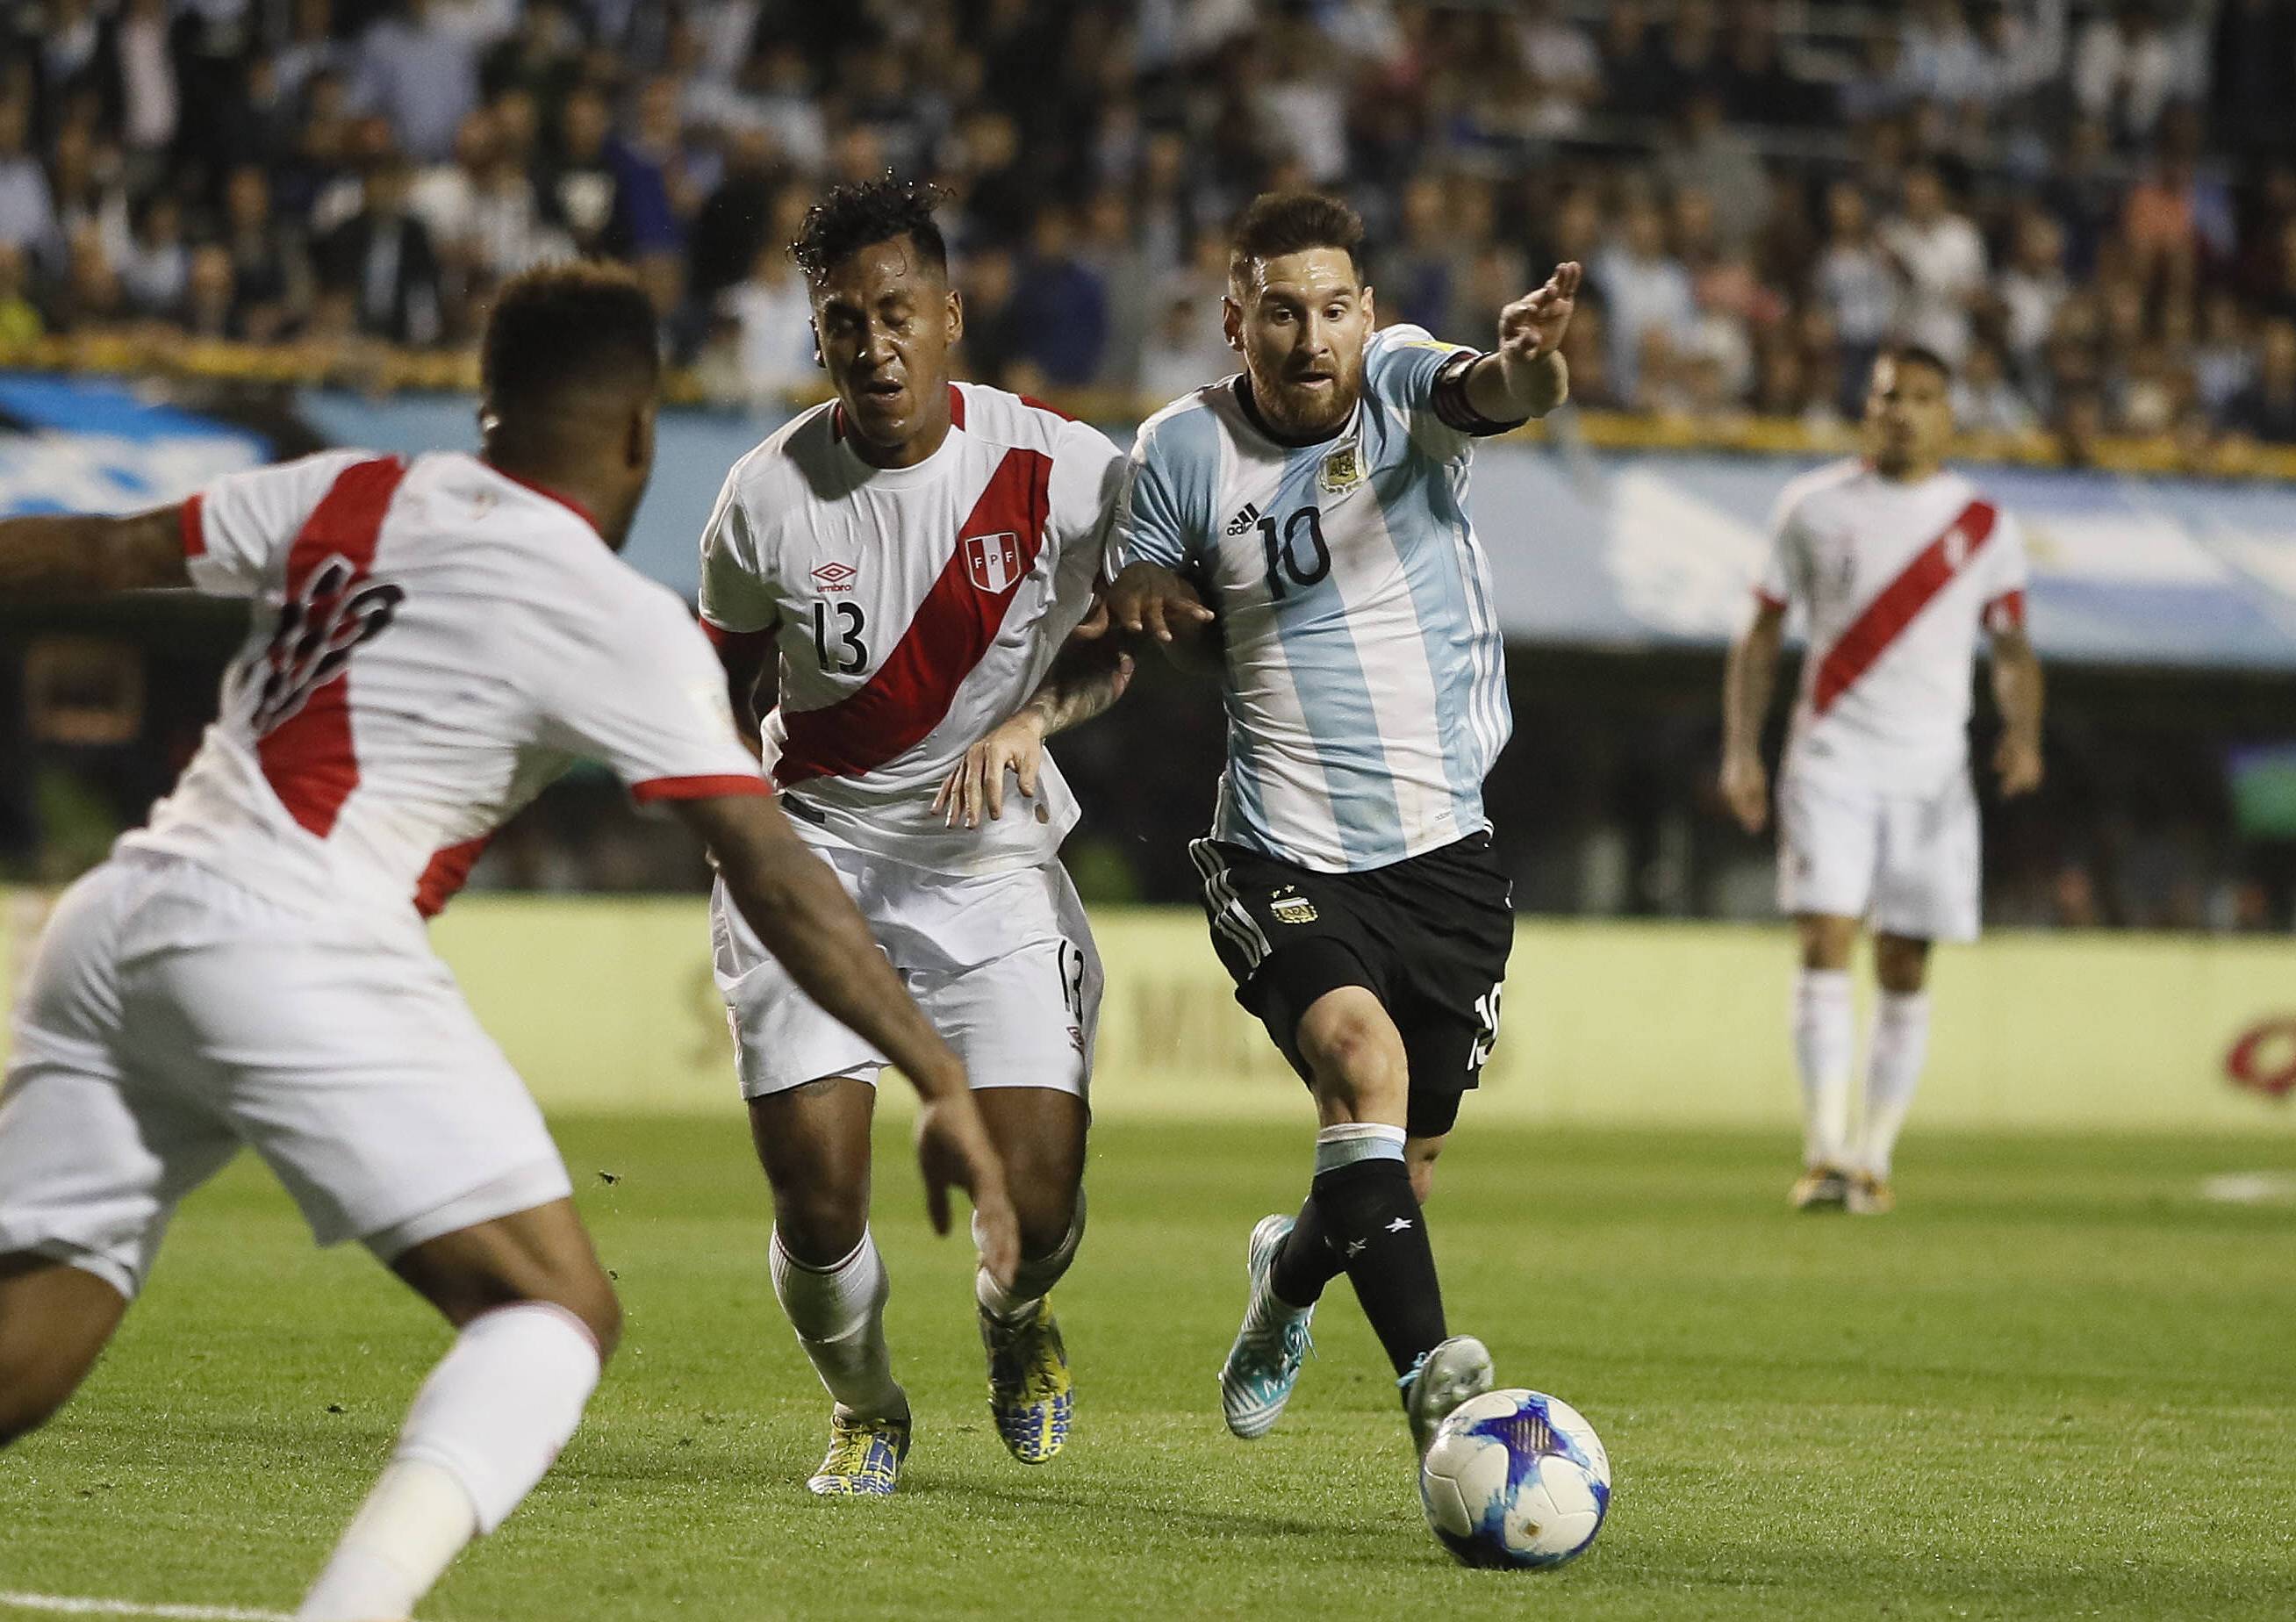 Futbol Argentina Vs Peru Claisficatorias Al Mundial De Rusia 2018 El Jugador De La Seleccion Argent